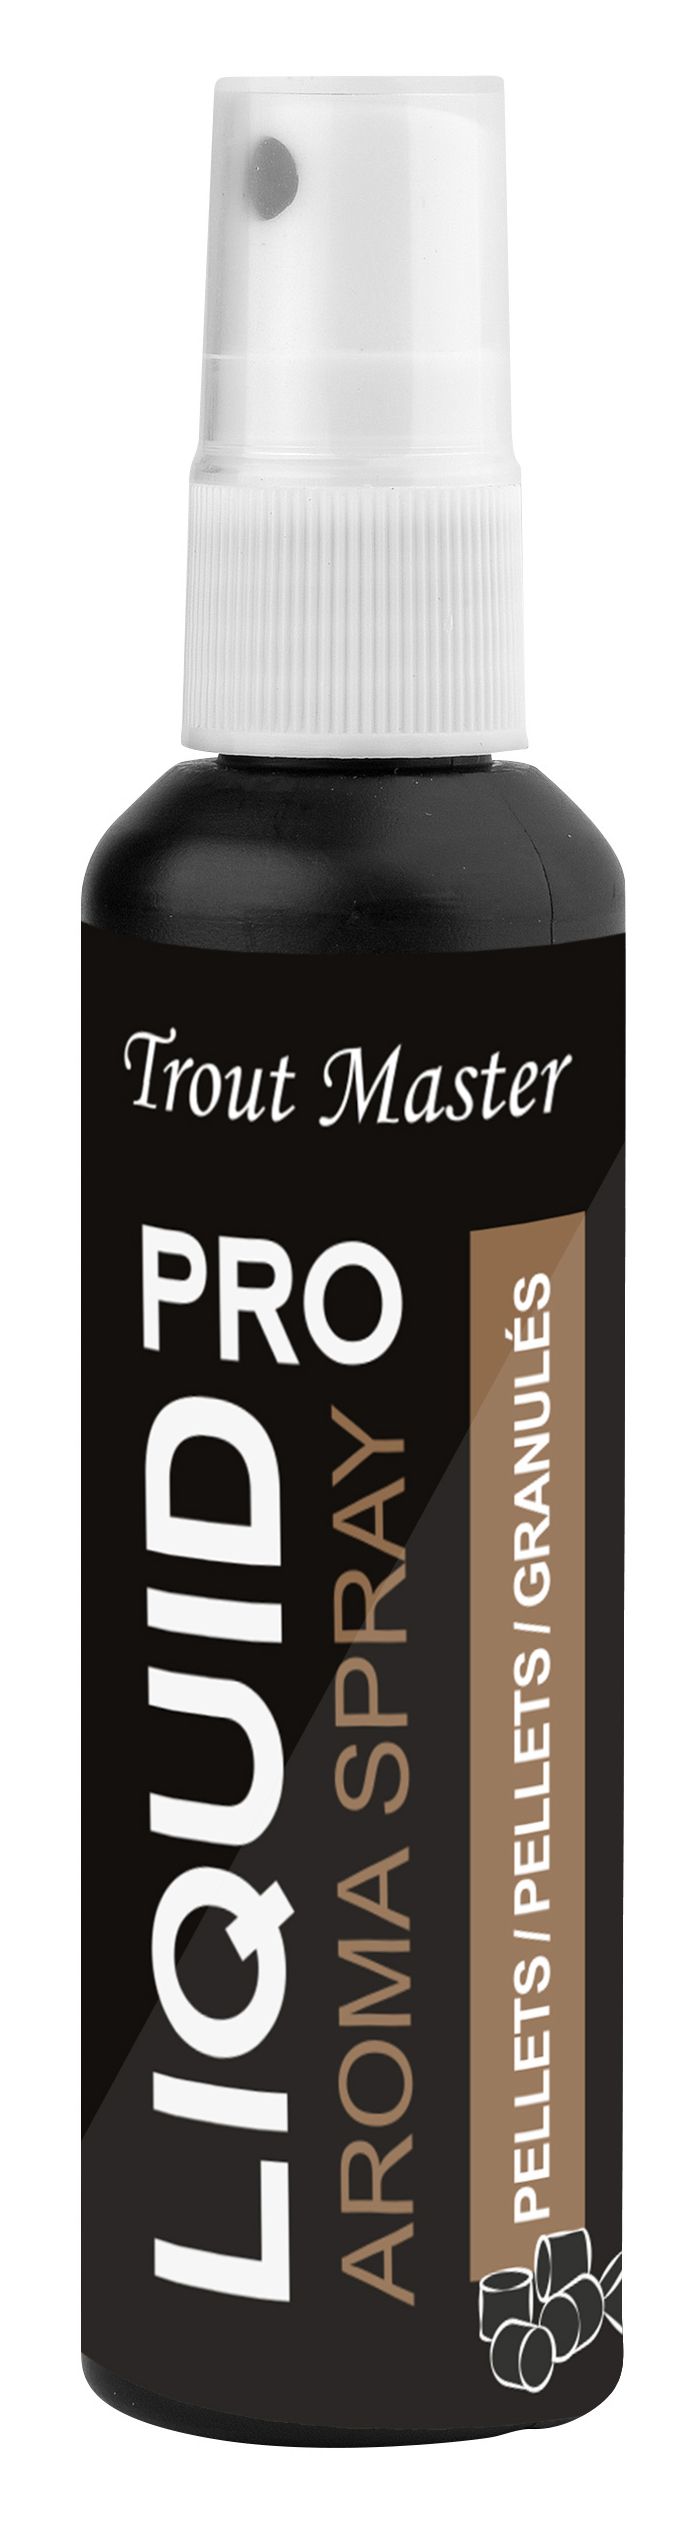 Trout Master Pro Liquid 50 ml Pellets                     